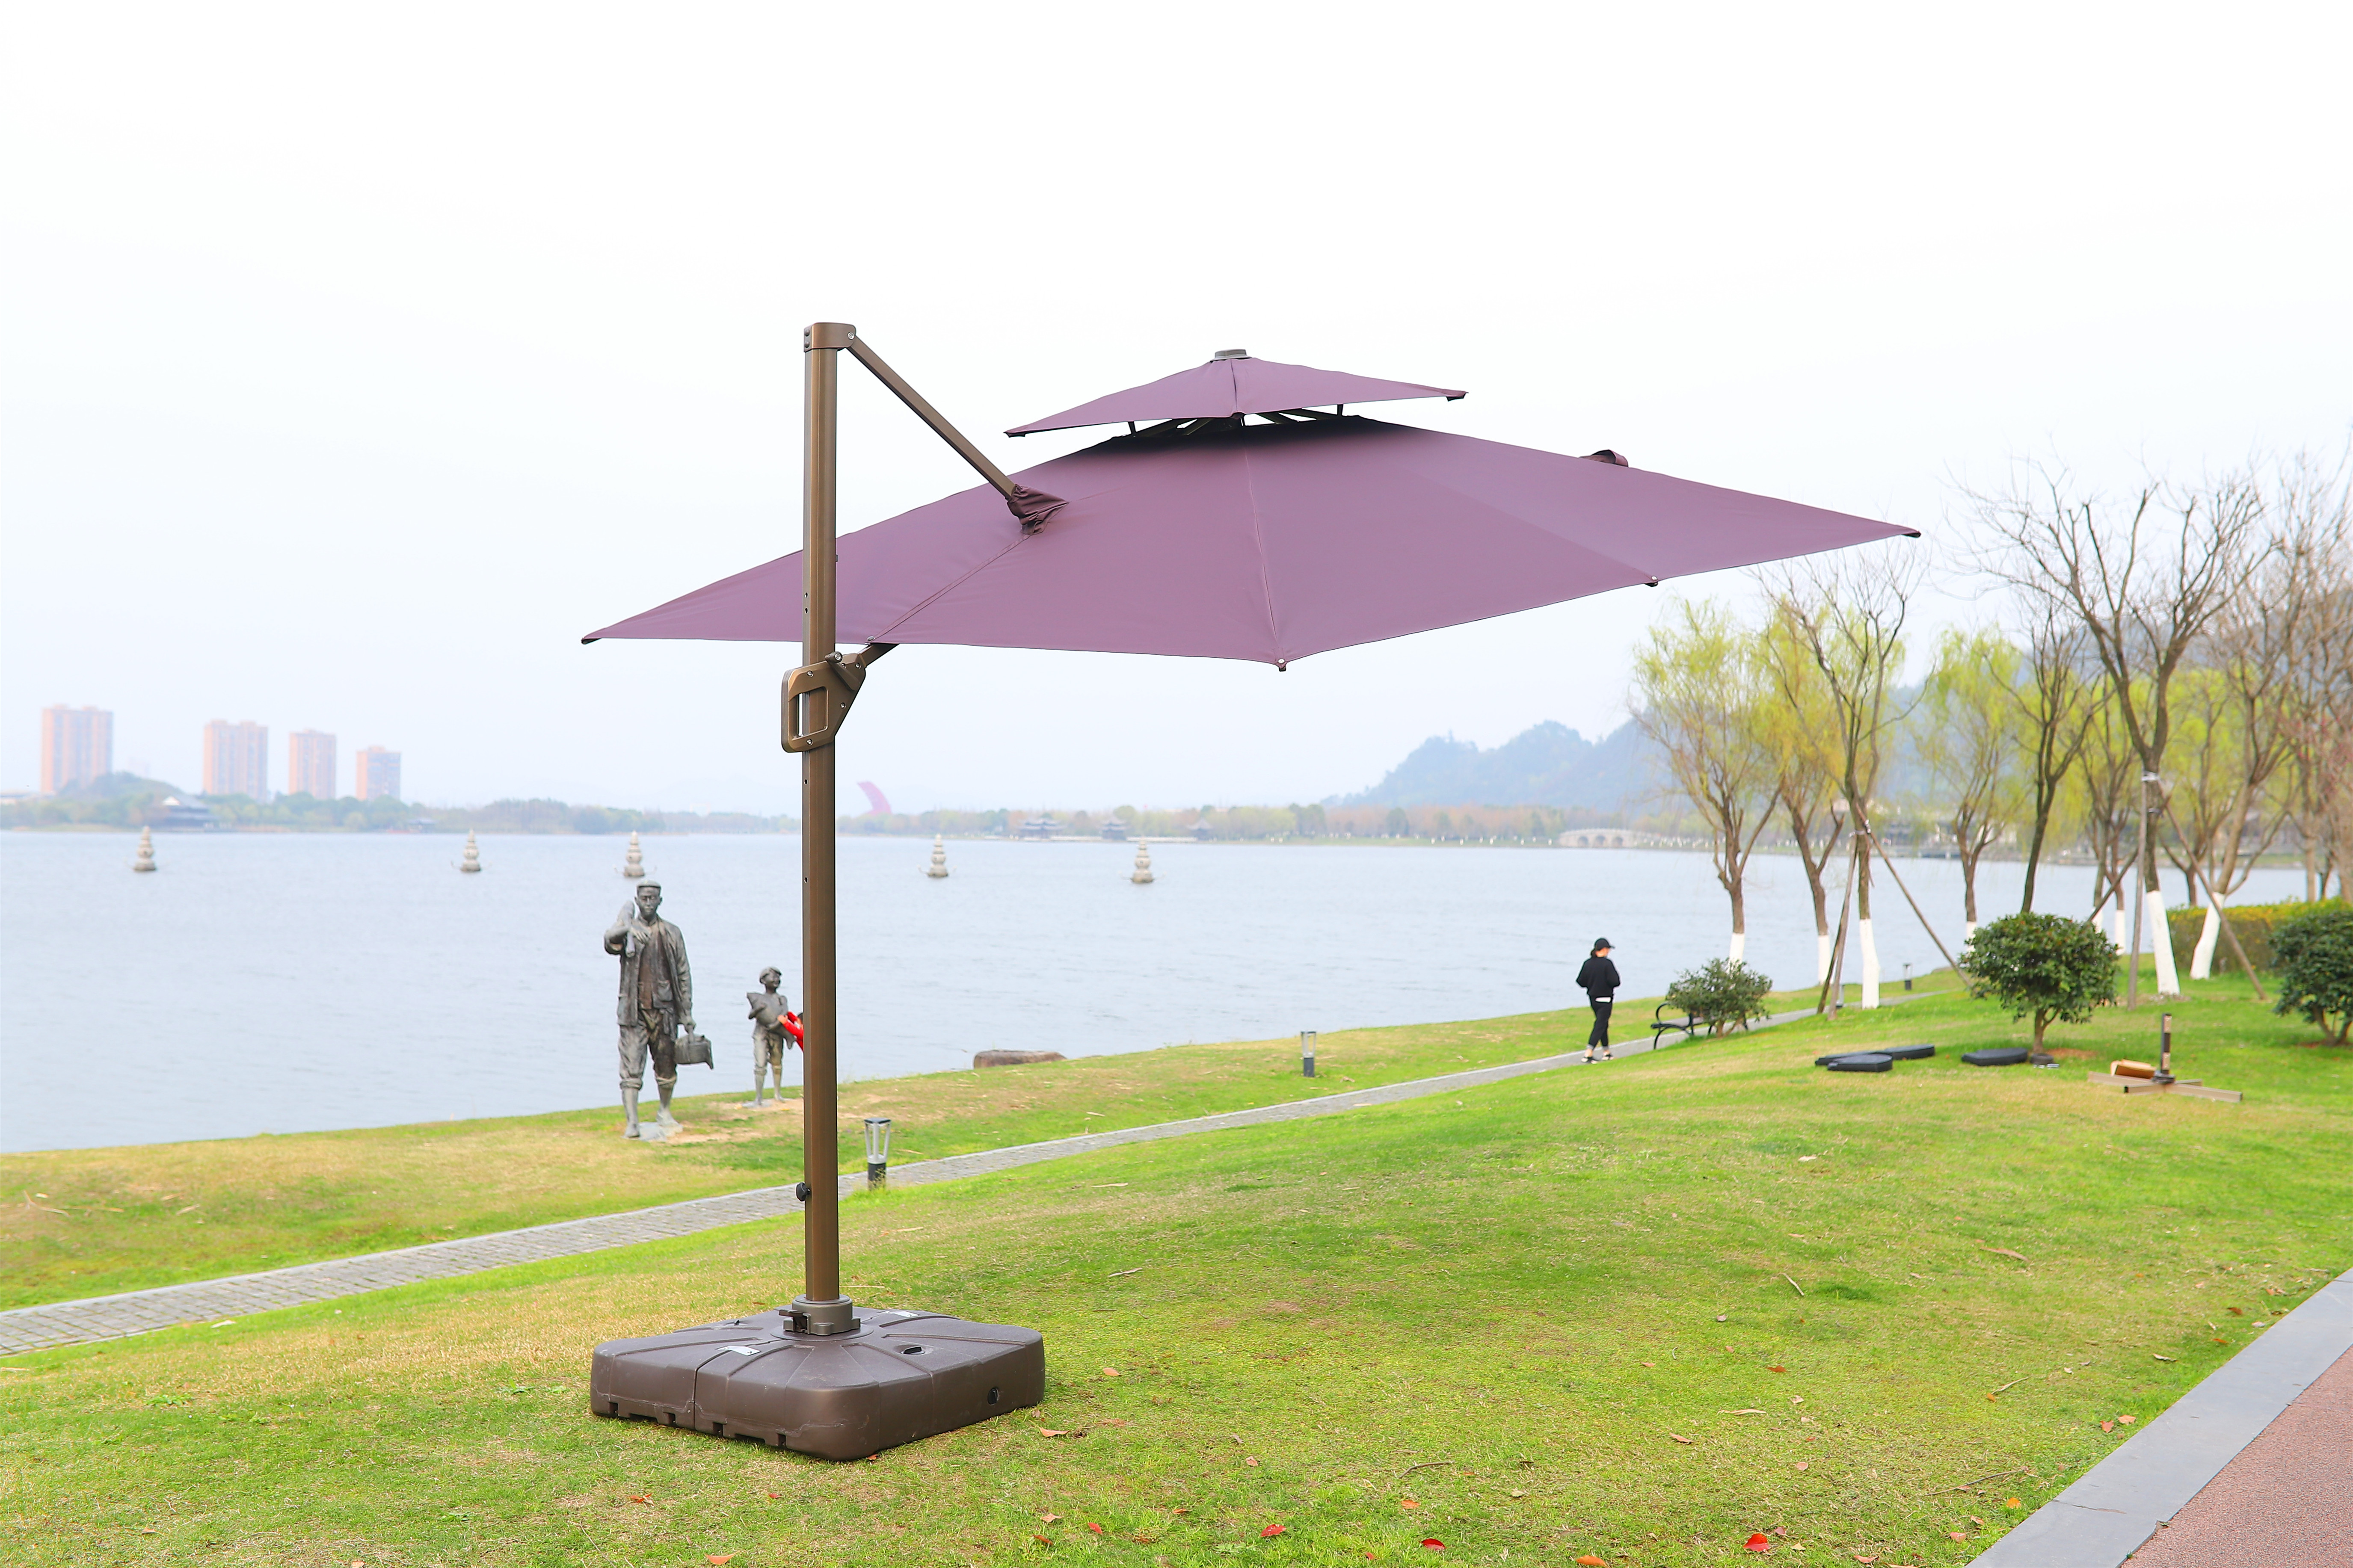  Round Aluminum alloy frame UV resistant parasol de plage beach patio umbrellas SZC-002